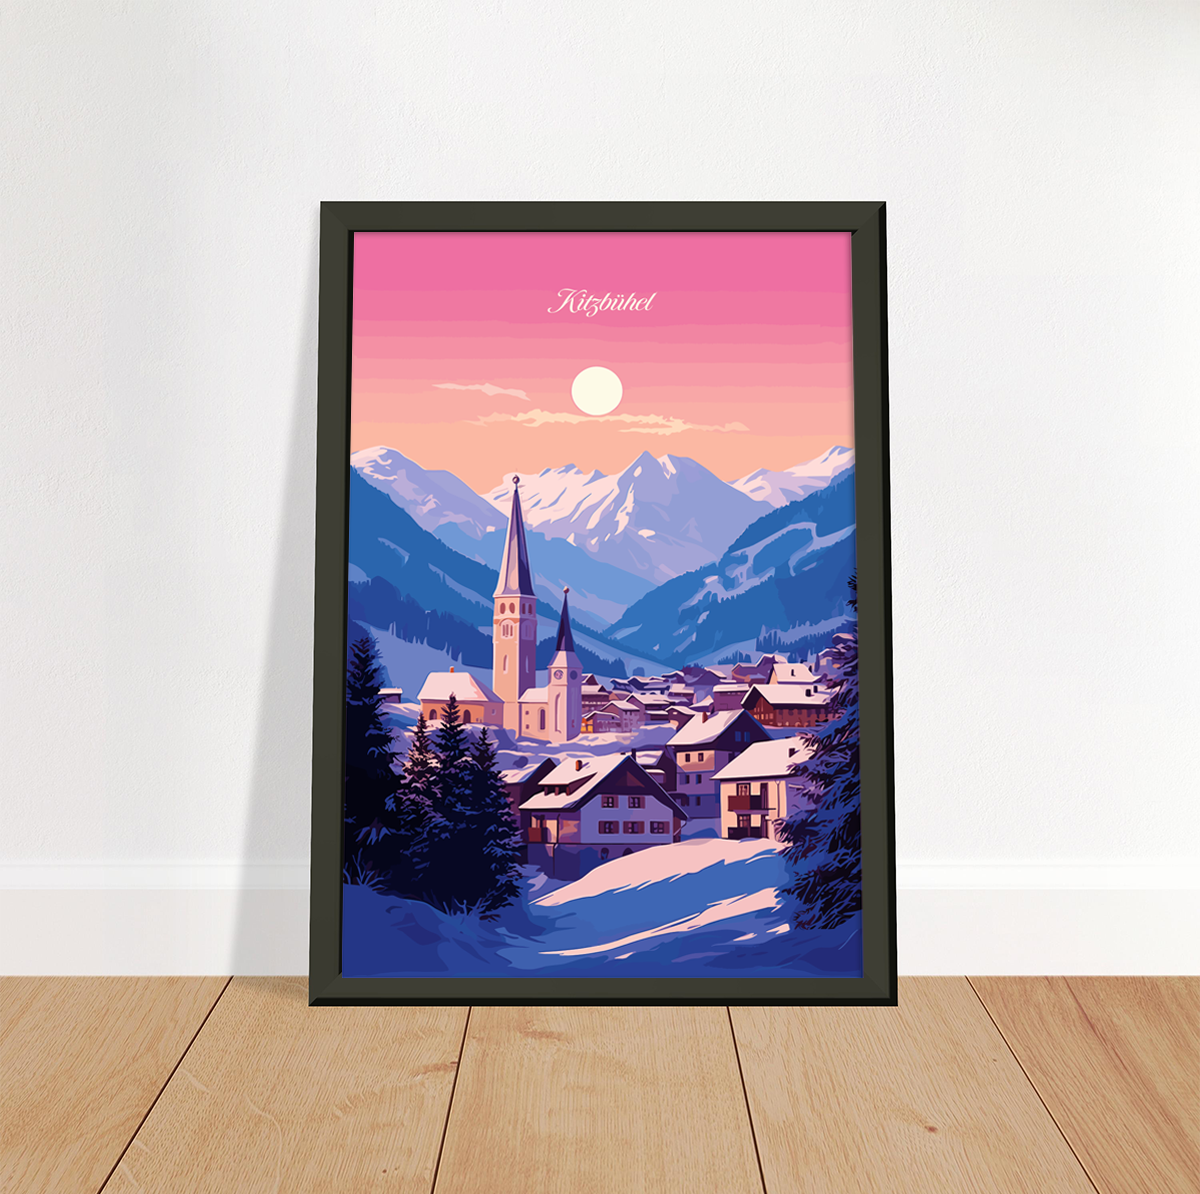 Kitzbuhel poster by bon voyage design